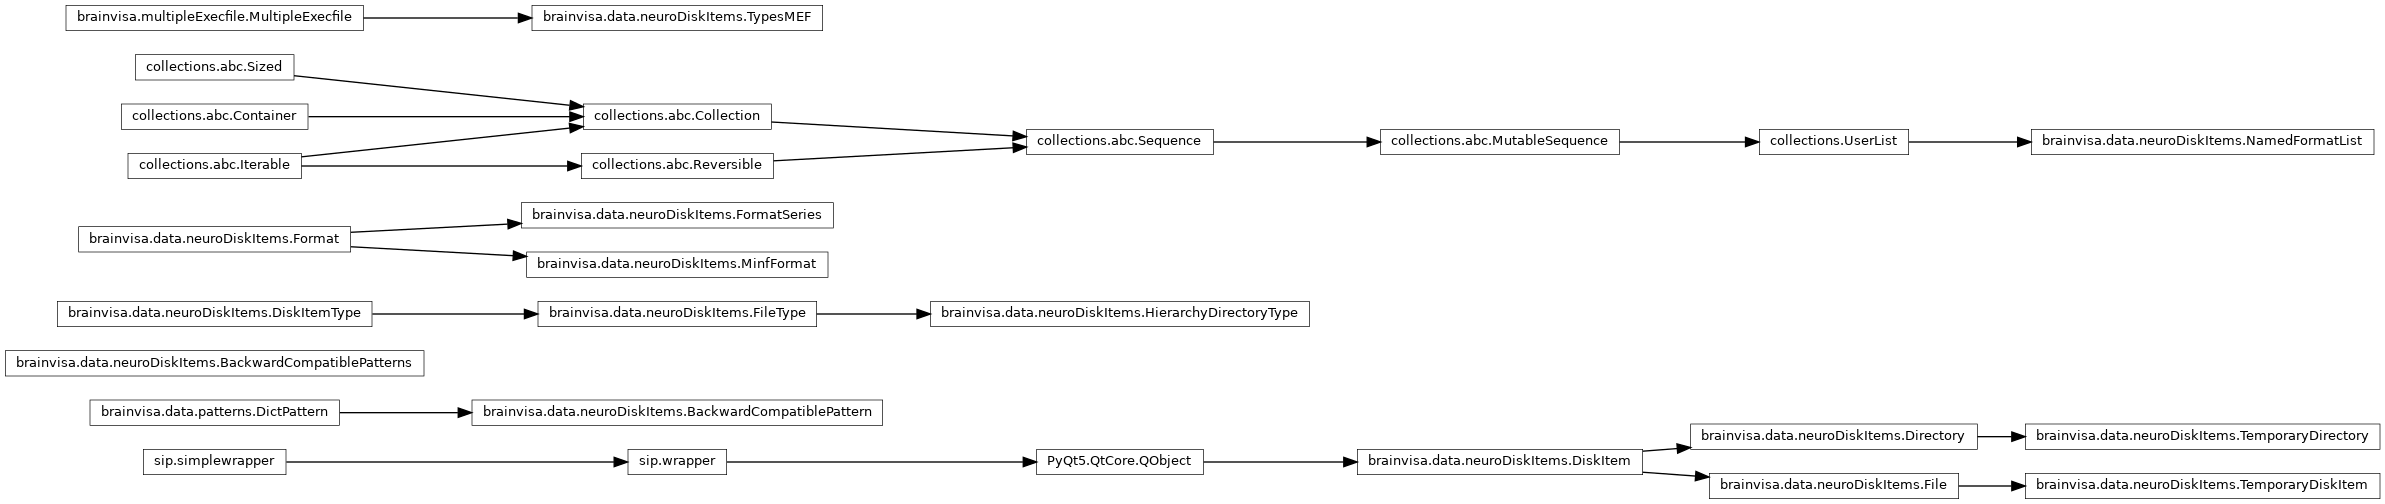 Inheritance diagram of brainvisa.data.neuroDiskItems